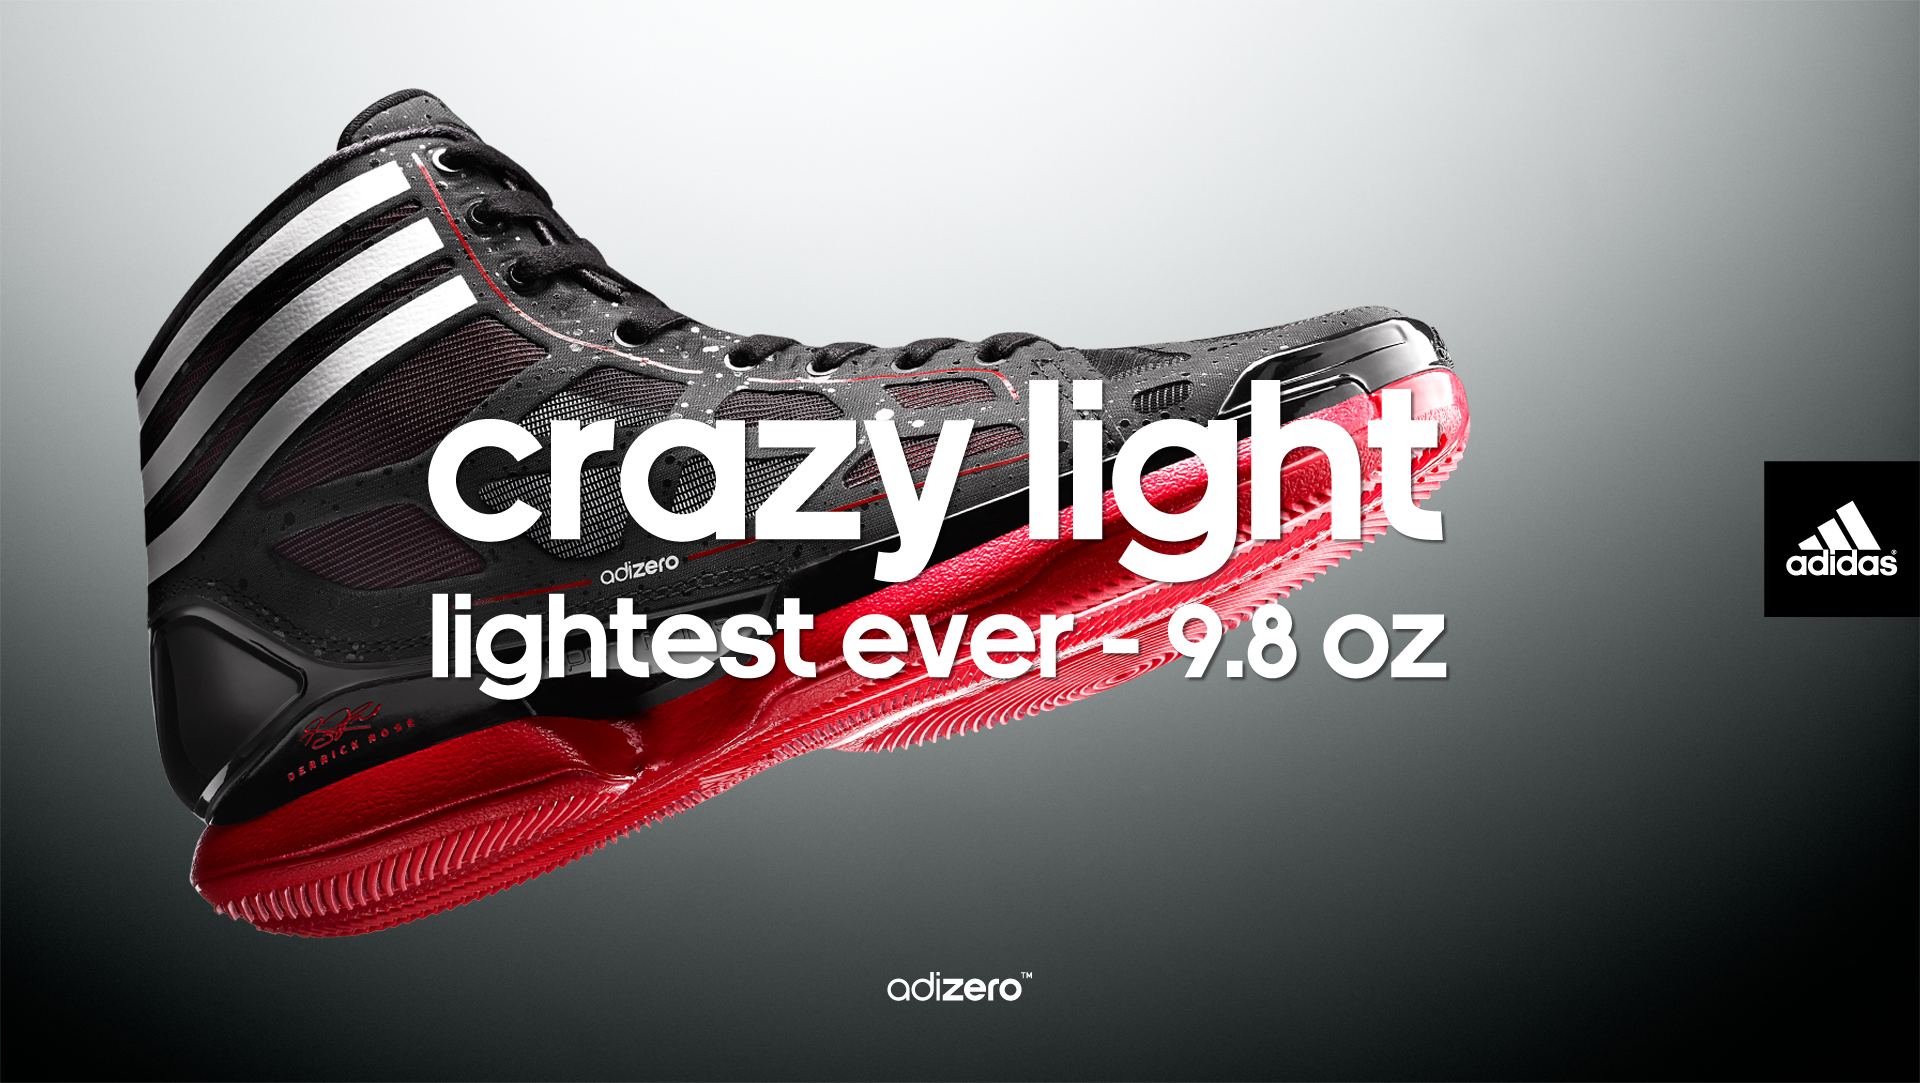 Adidas Adizero Crazy Light Derrick Rose Wallpaper